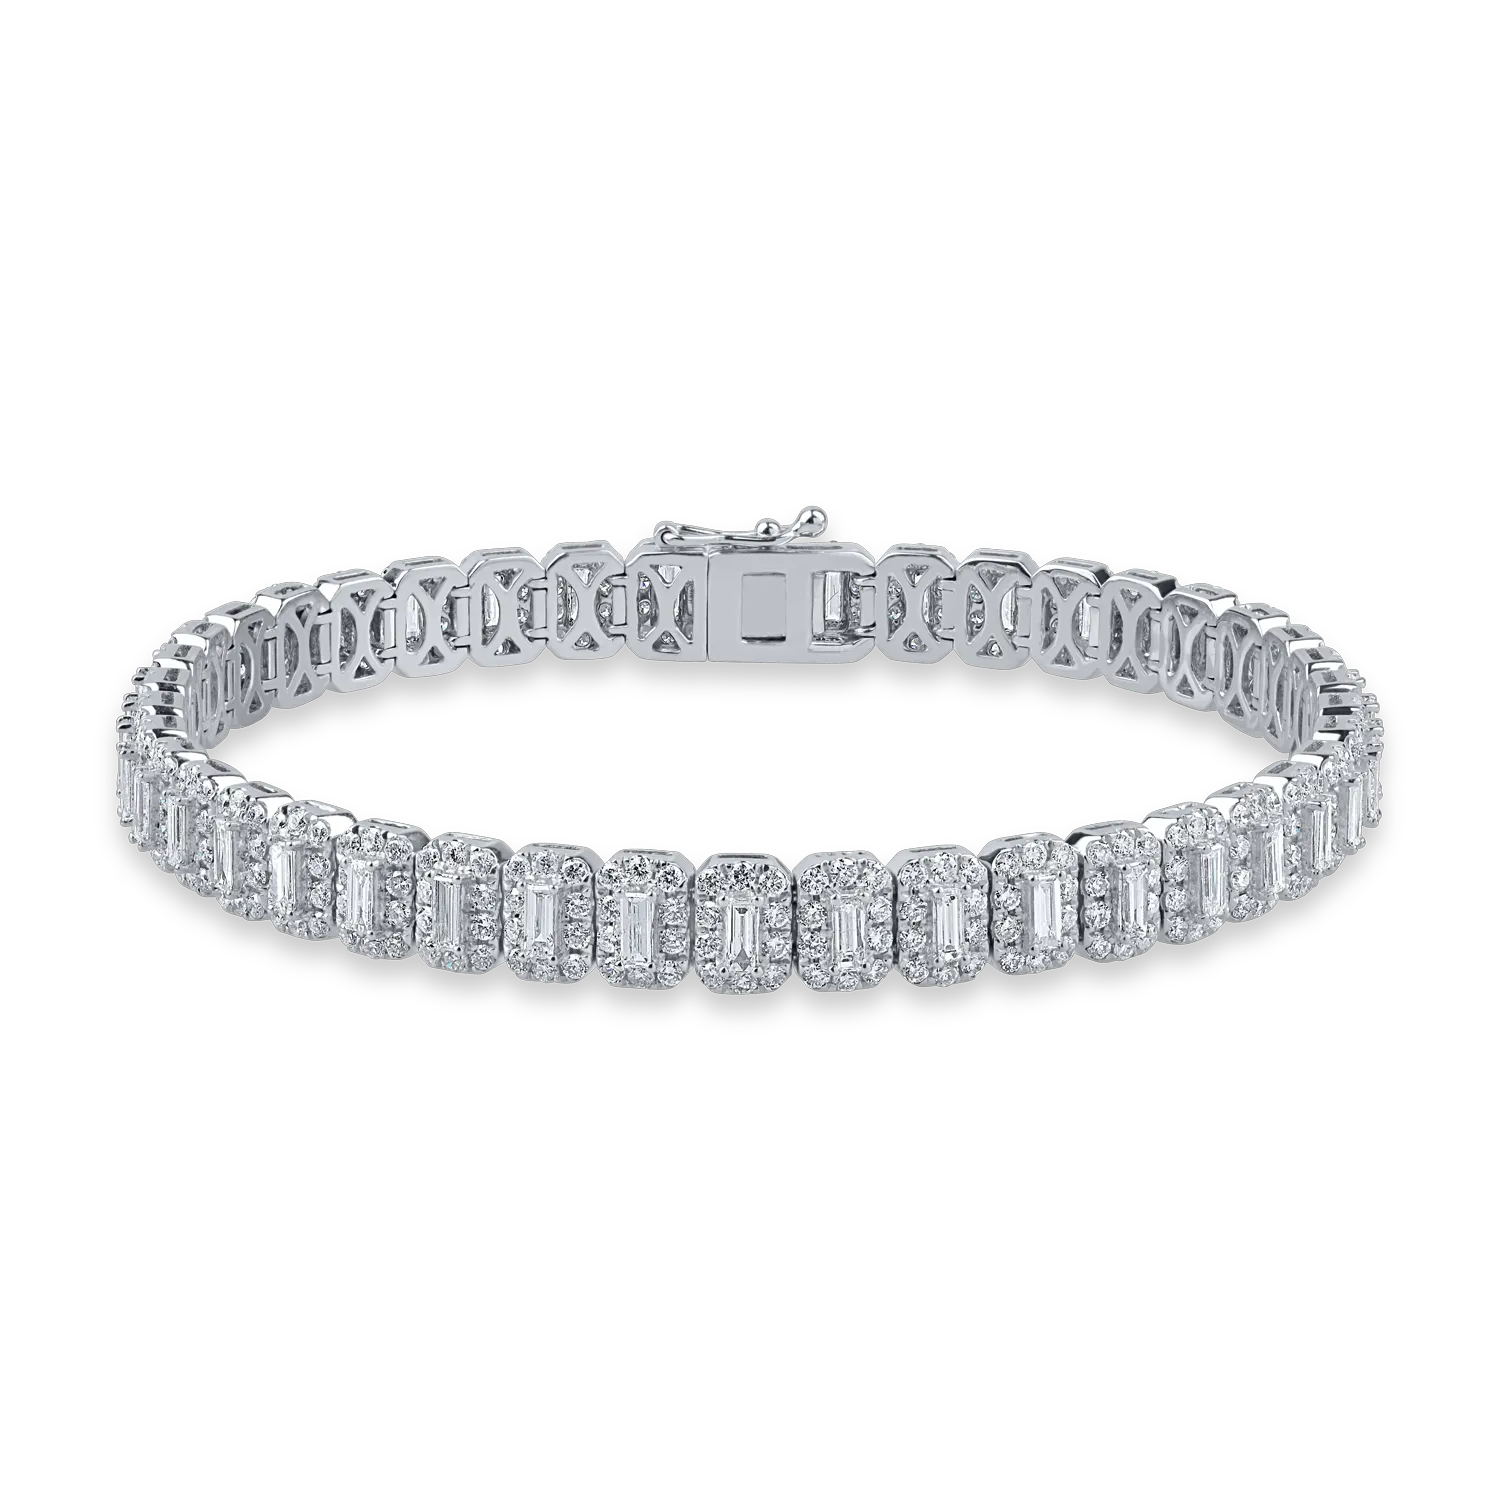 White gold tennis bracelet with 1.48ct diamonds